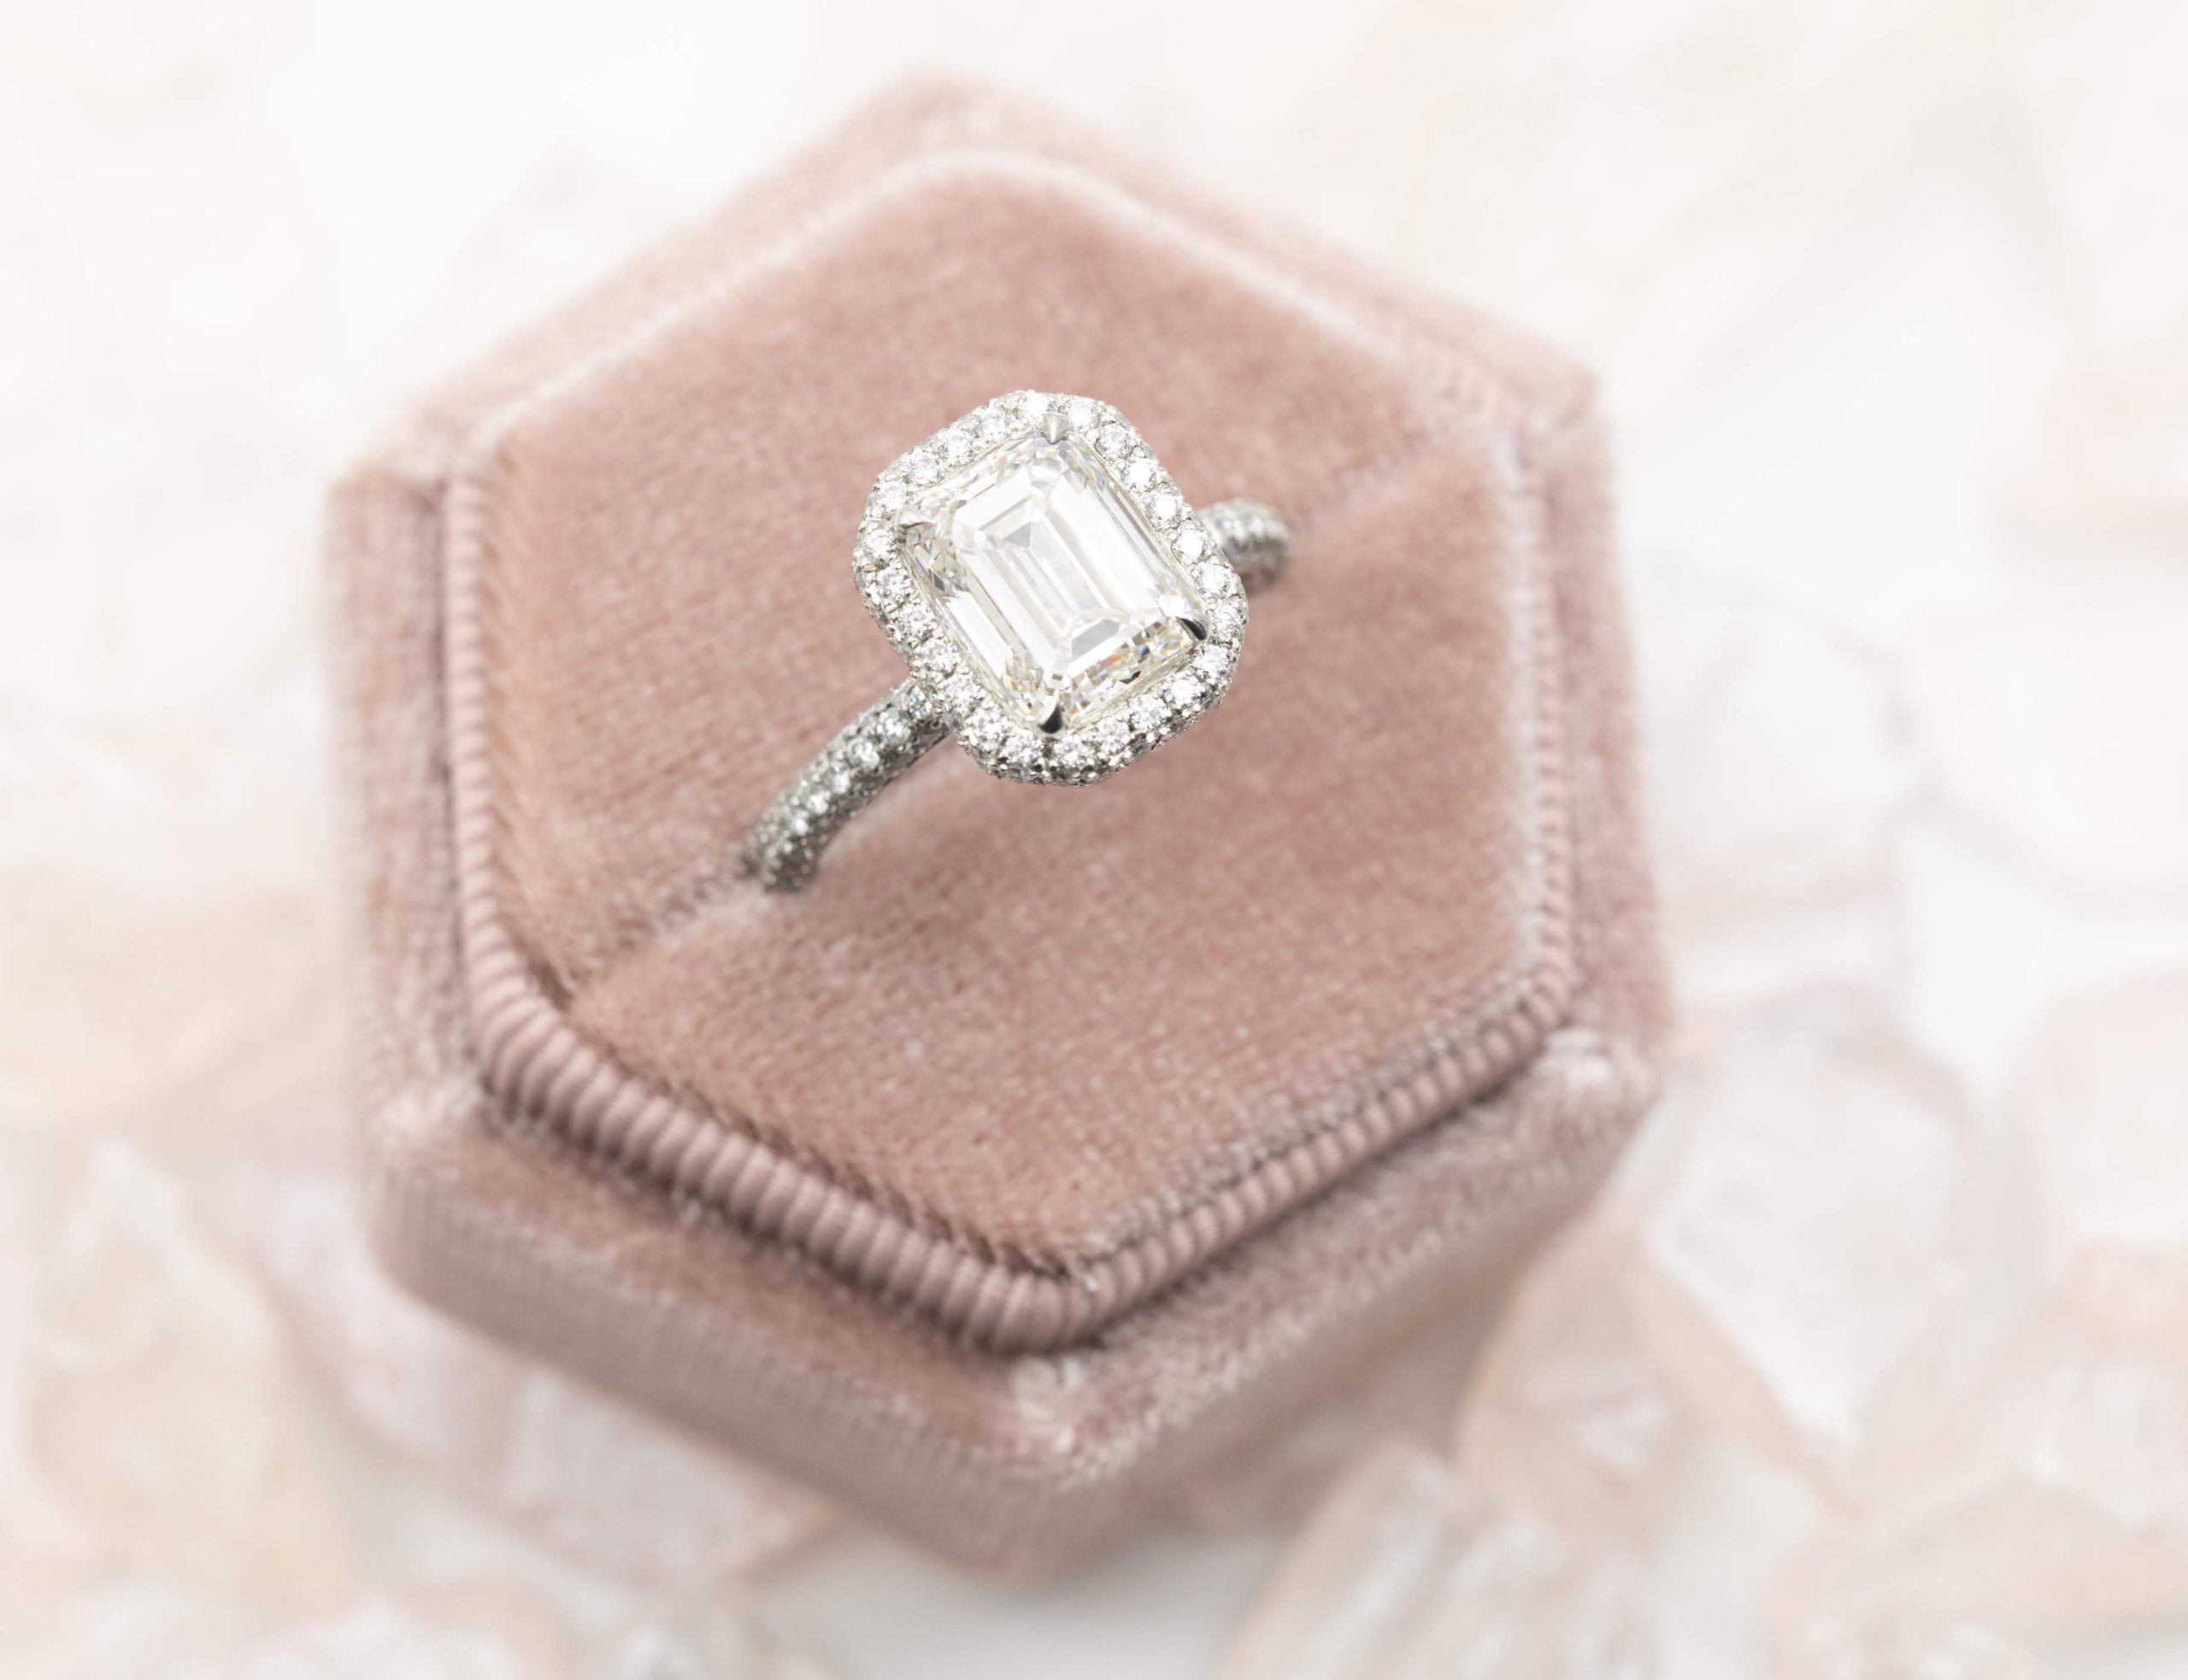 Halo GIA Cushion Cut Diamond Engagement Ring 2.4ct 14K White Gold by  Luxurman 000467